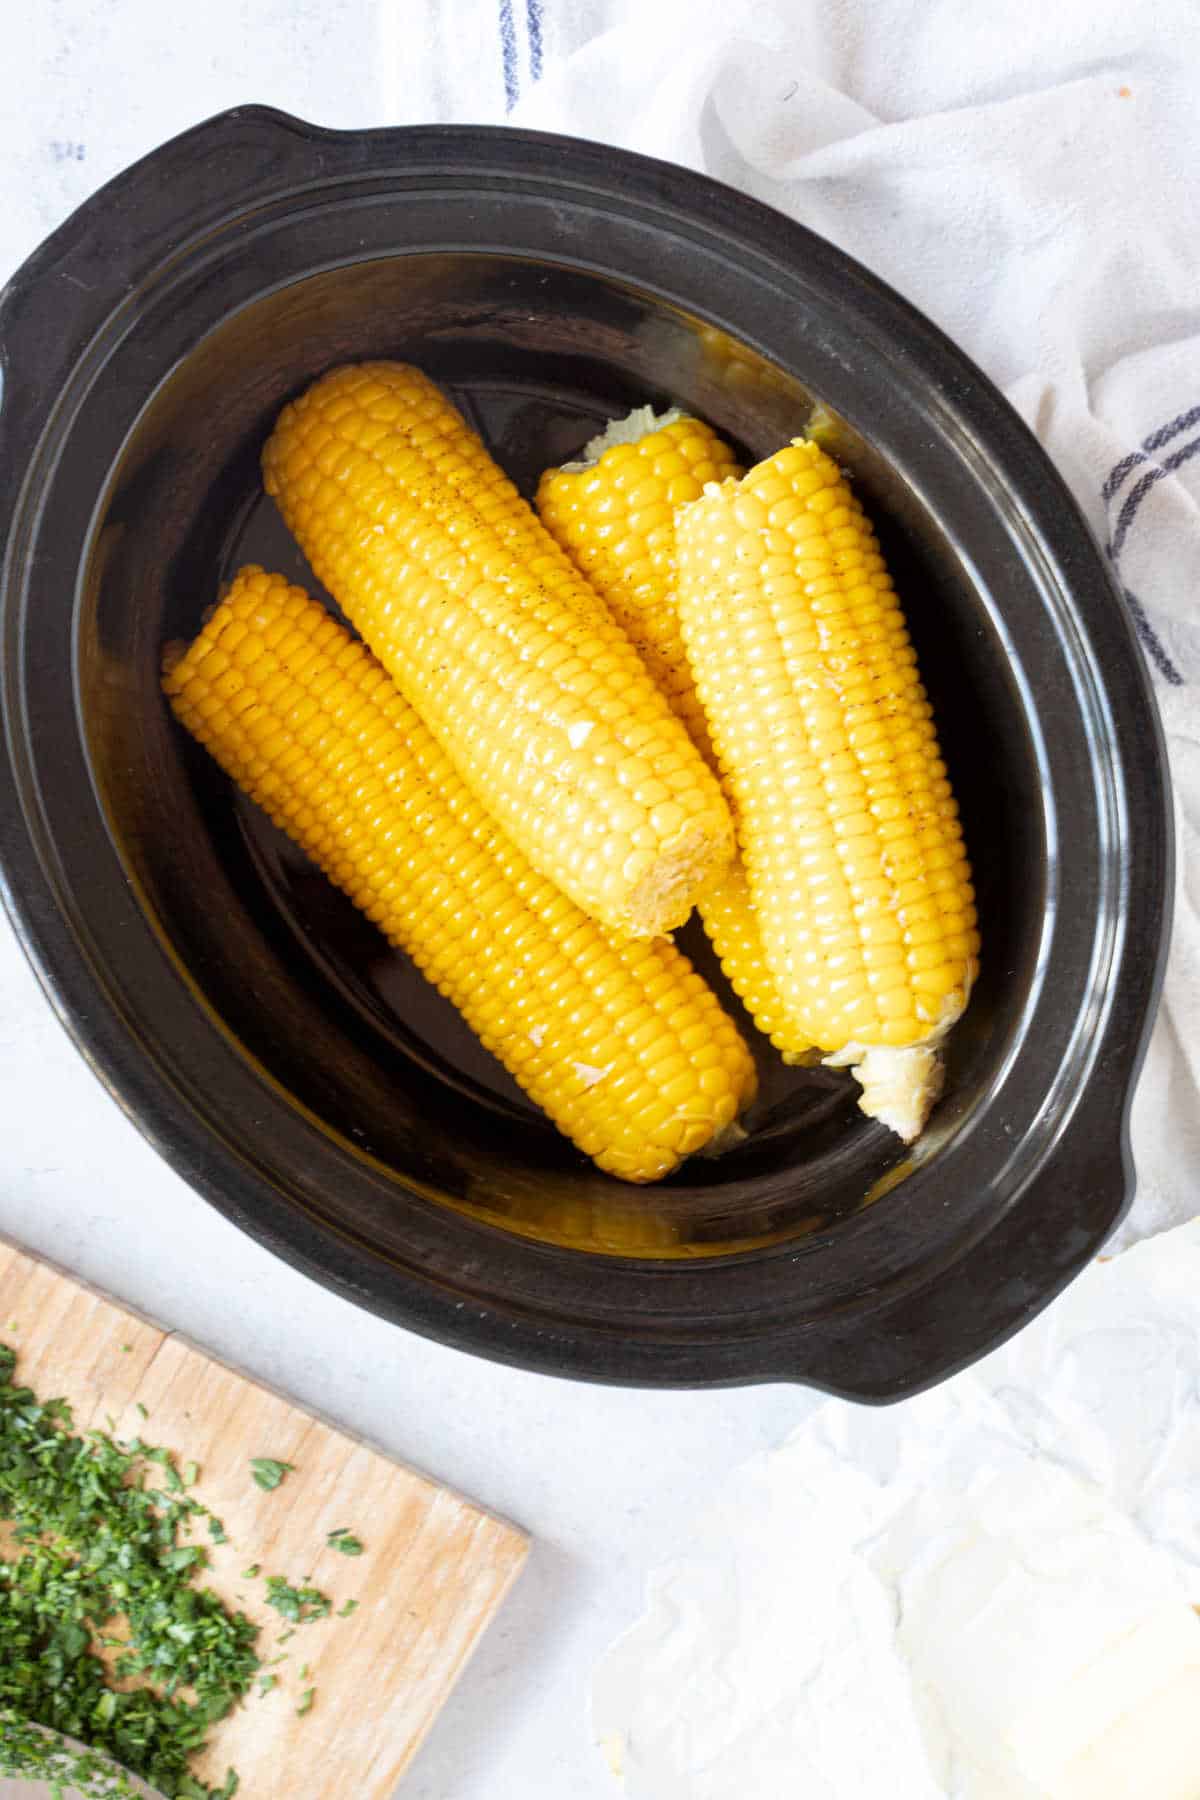 Slow cooker corn in a black slow cooker basin.